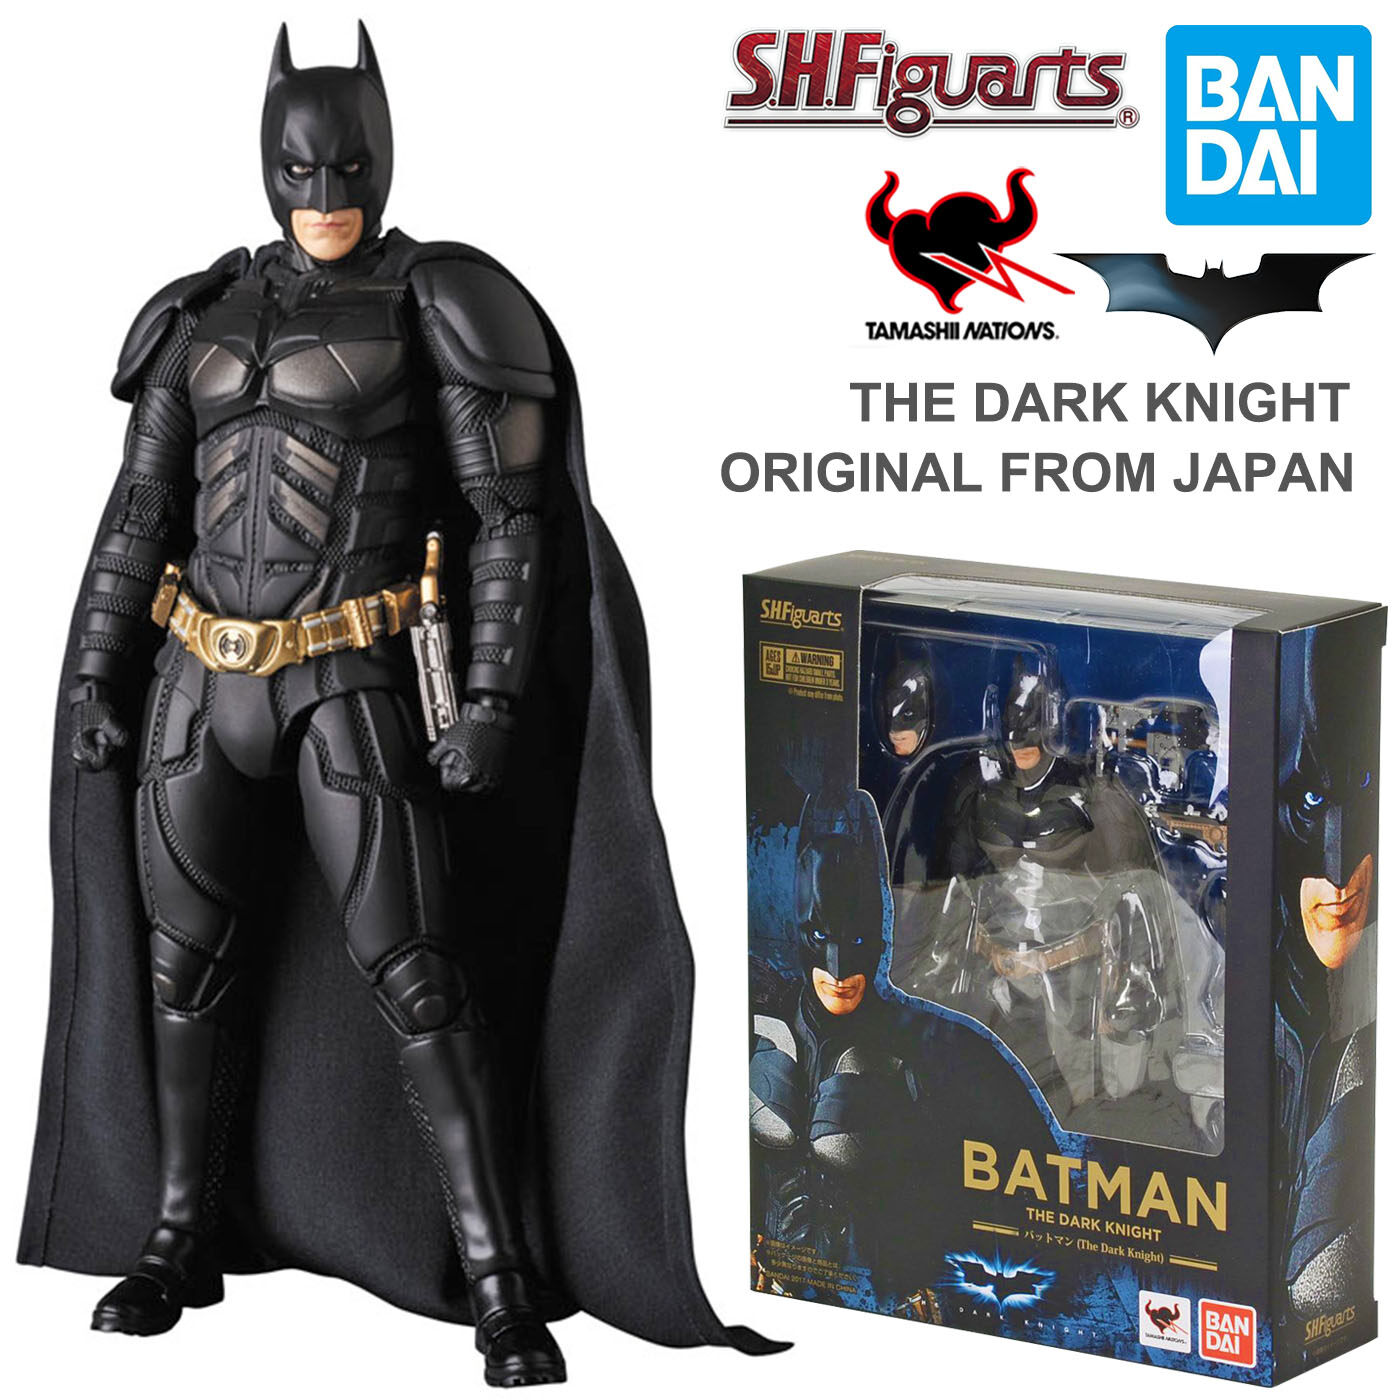 Model โมเดล งานแท้ 100ndai S.H.Figuarts จากหนัง Batman The Dark Knight 2008 แบทแมน อัศวินรัตติกาล Bruce Wayne บรูซ เวย์น Christian Bale คริสเตียน เบล Ver Original from Japan Figma ฟิกม่า Anime ขยับแขน-ขาได้ อนิเมะ การ์ตูน มังงะ manga Figure ฟิกเกอร์